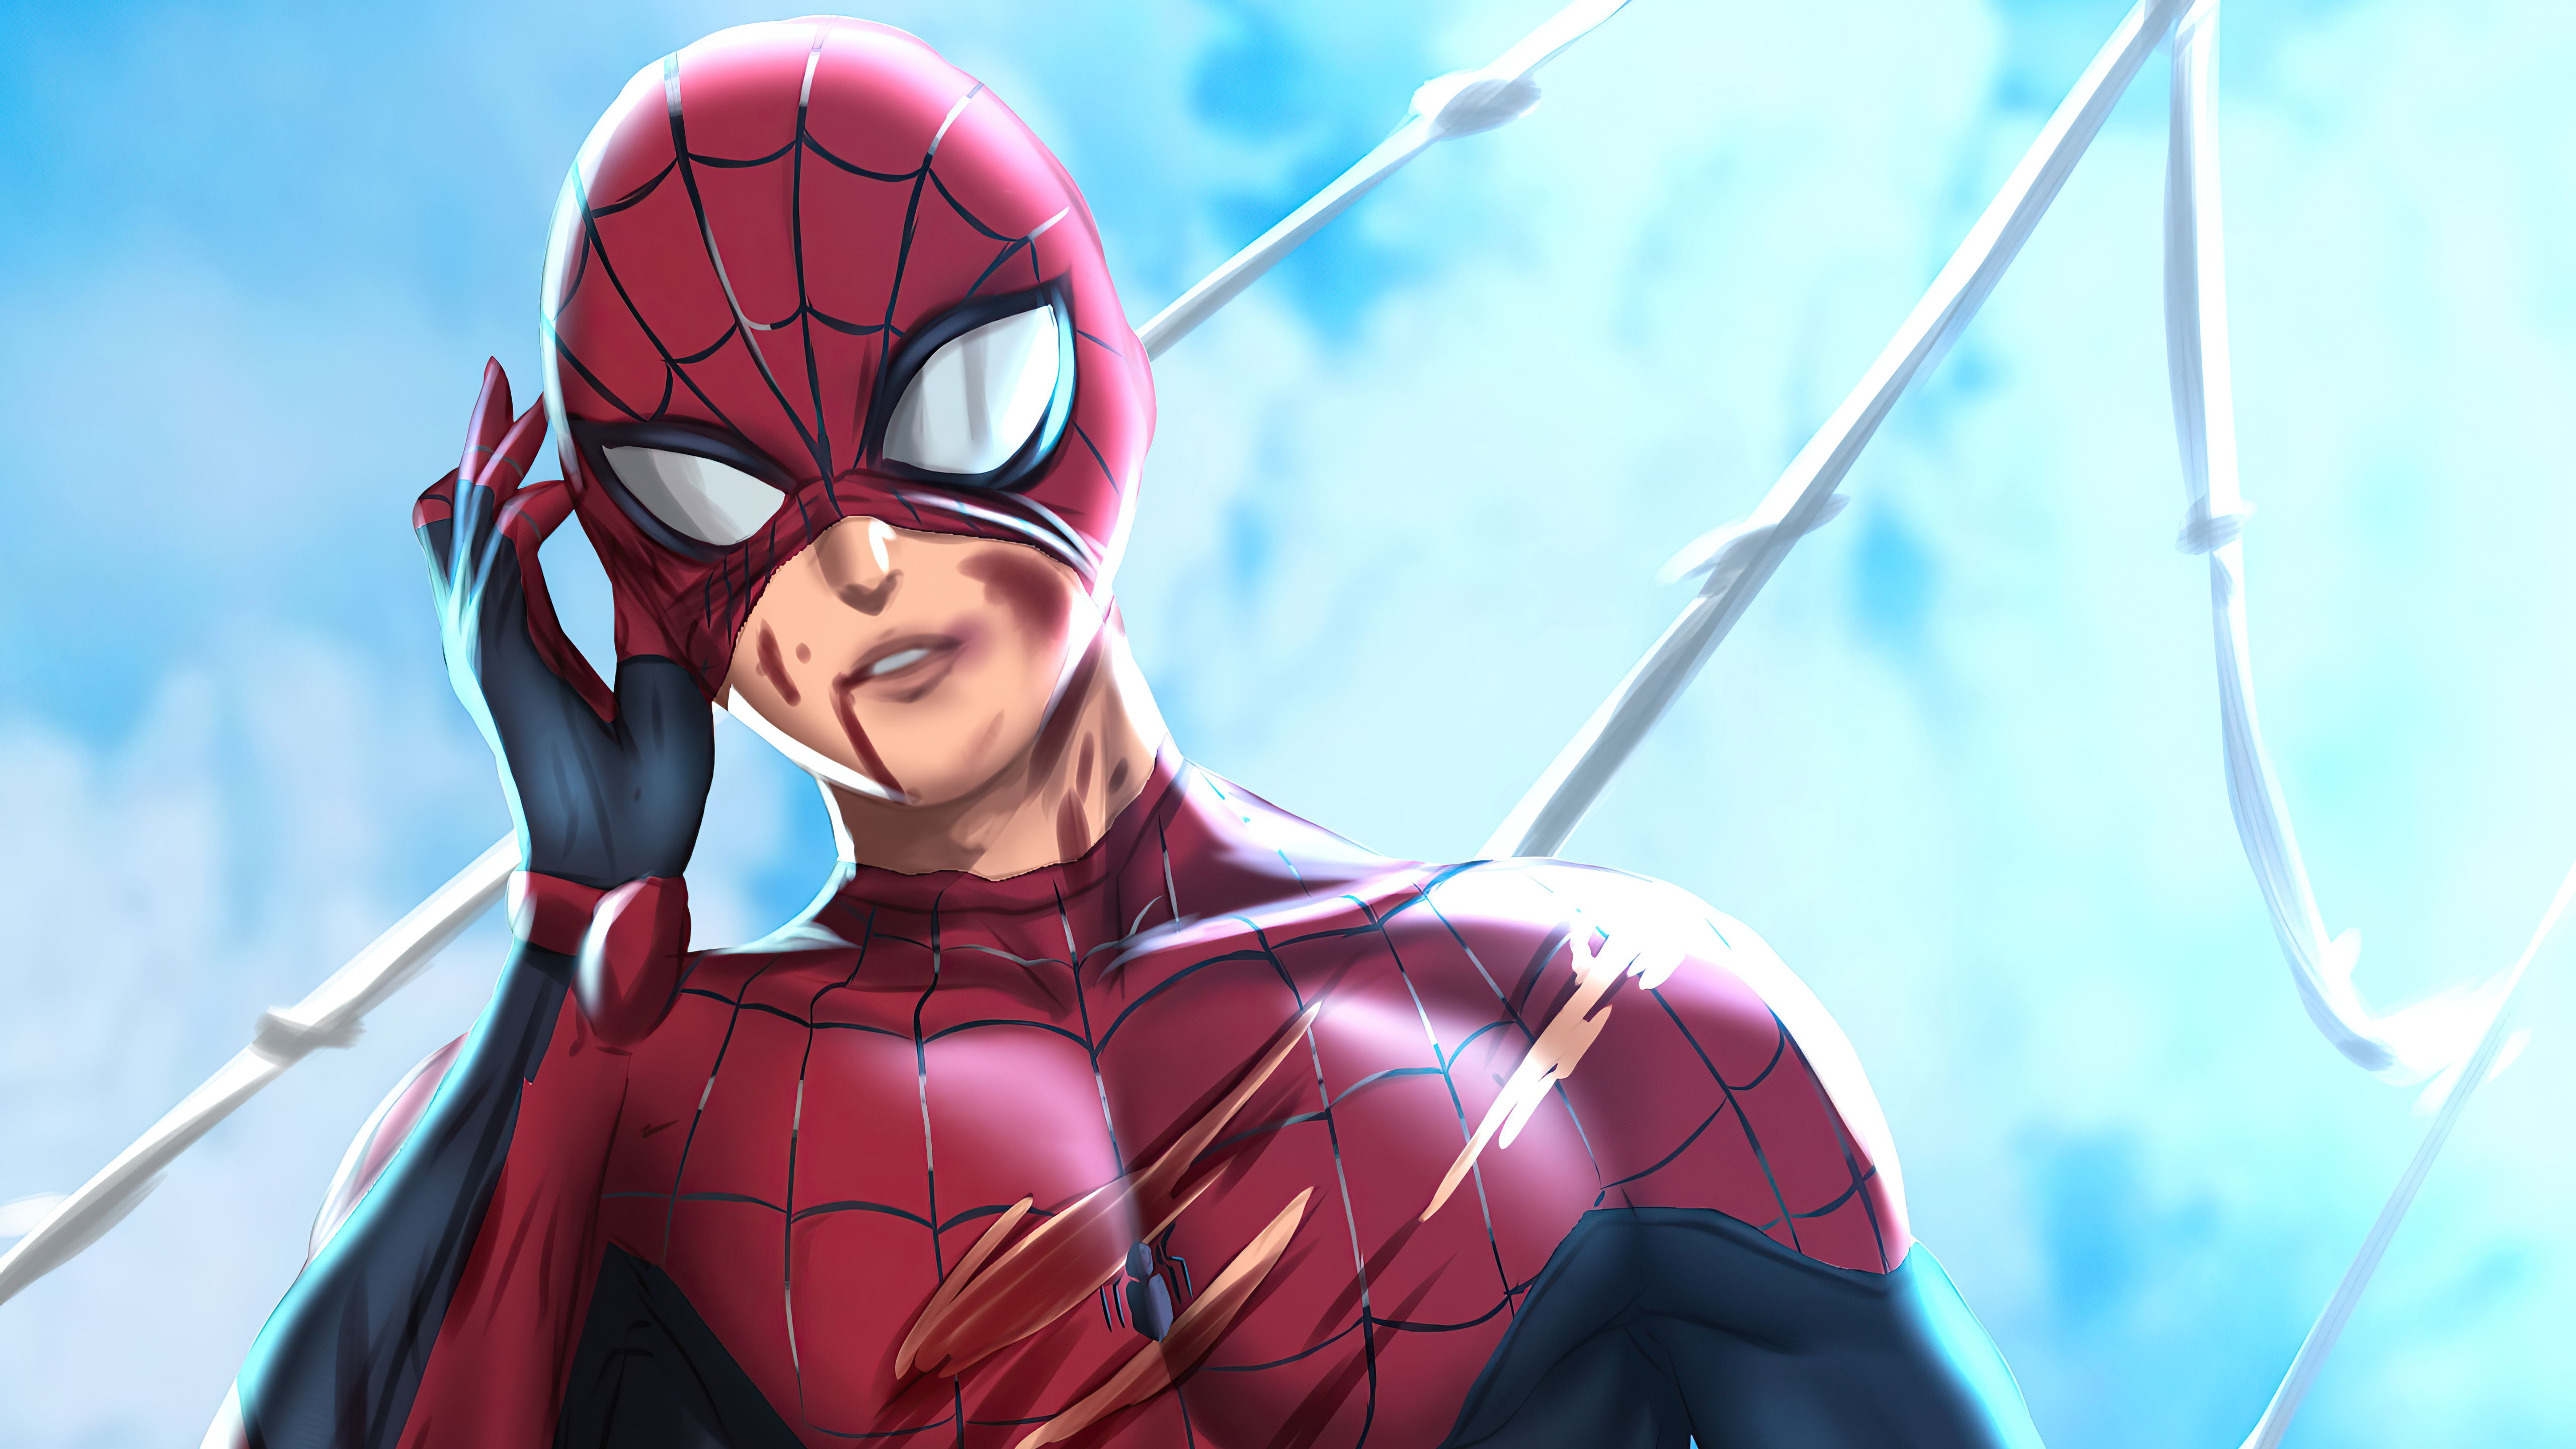 Comics Spider-Man 4k Ultra HD Wallpaper by Ari yugito